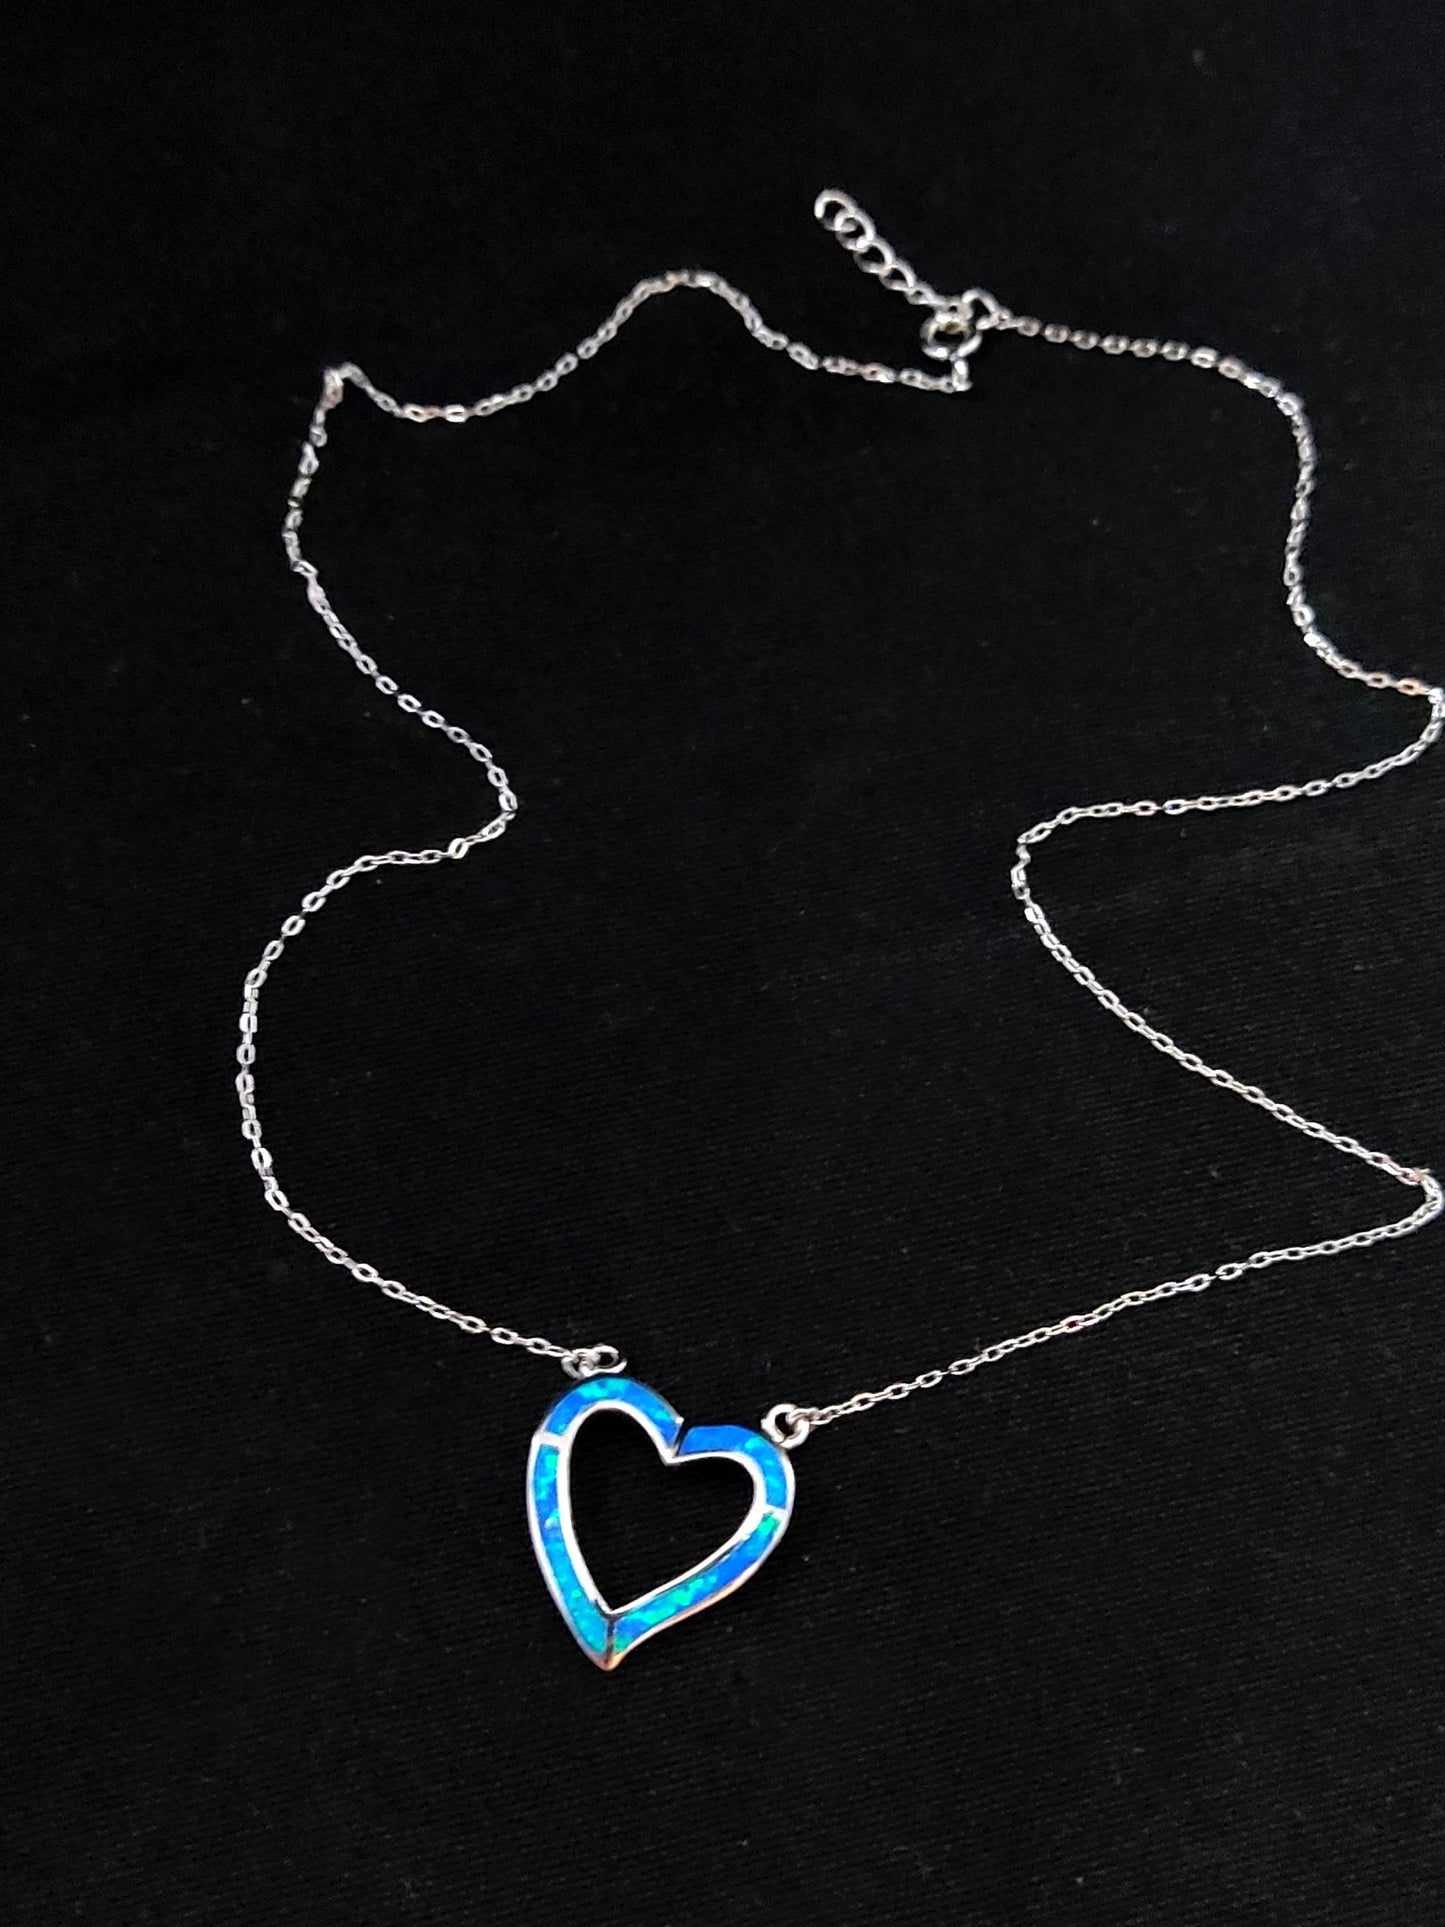 Sterling Silver 925 Fire Rainbow Blue Opal Heart Fine Necklace, Chain And Blue Opal Pendant, Blau Opal Herz Anhanger, Bijoux Grecque, Heart